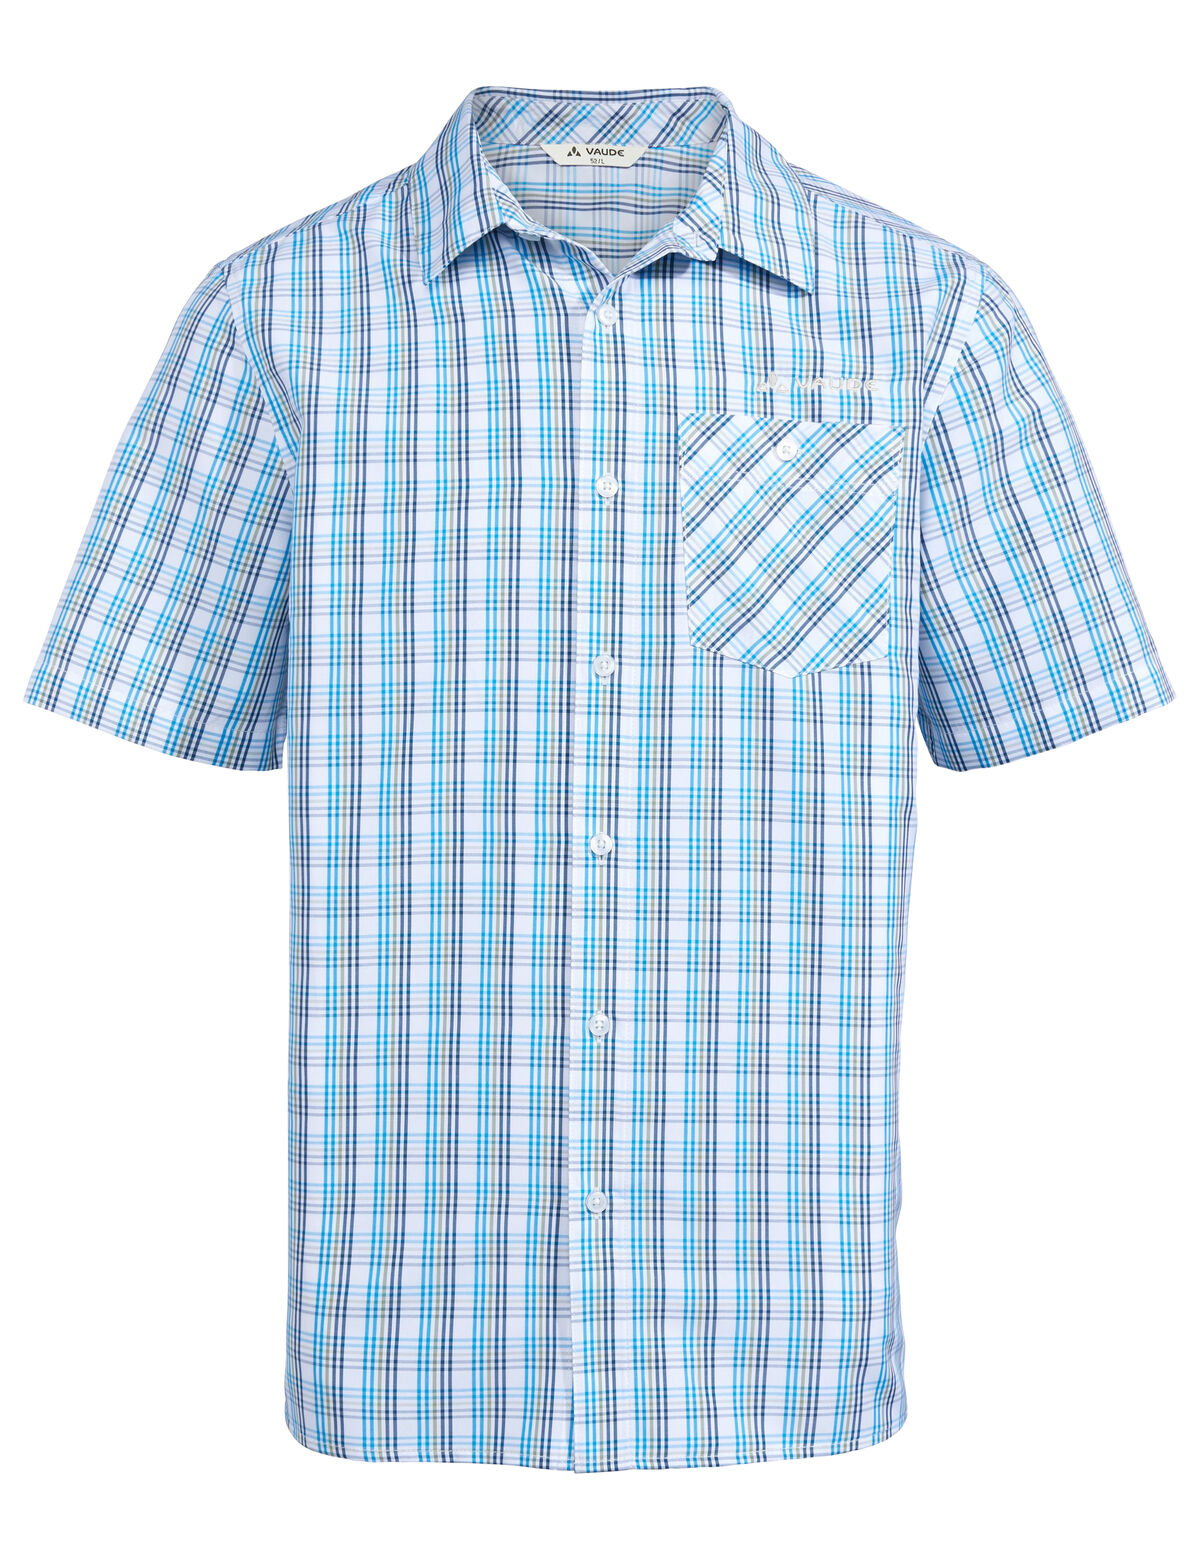 Vaude Albsteig Shirt II - Camisa - Hombre